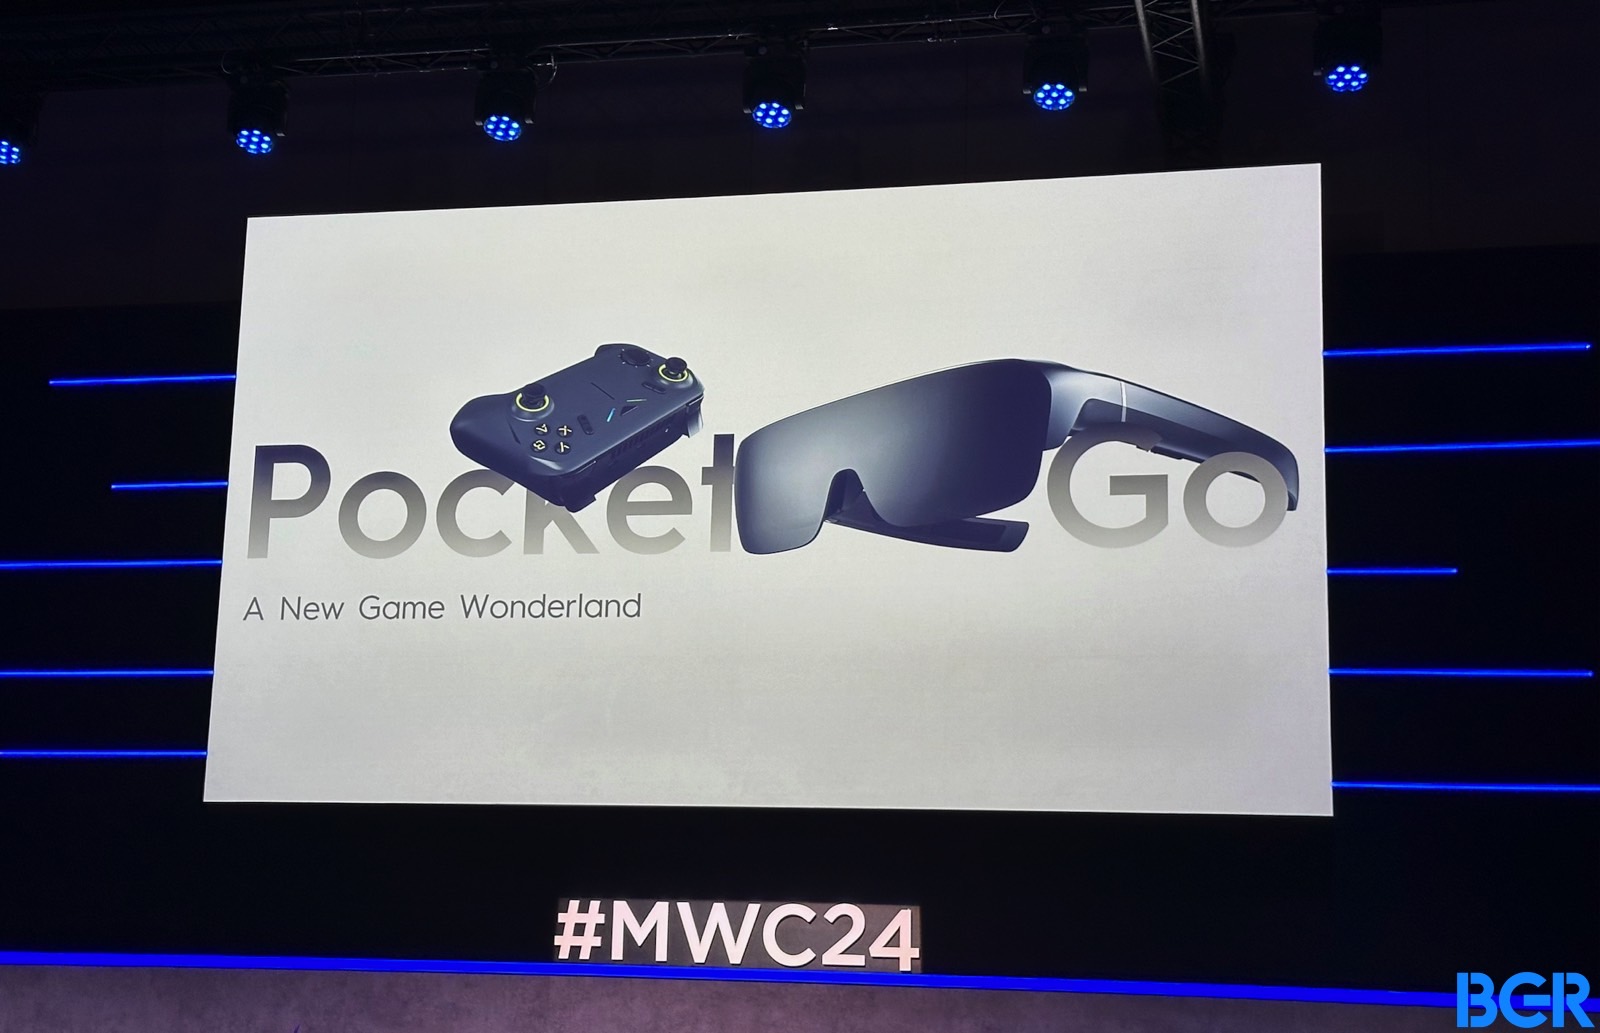 Tecno Pocket Go AR Windows 11 gaming system announced at MWC 2024.